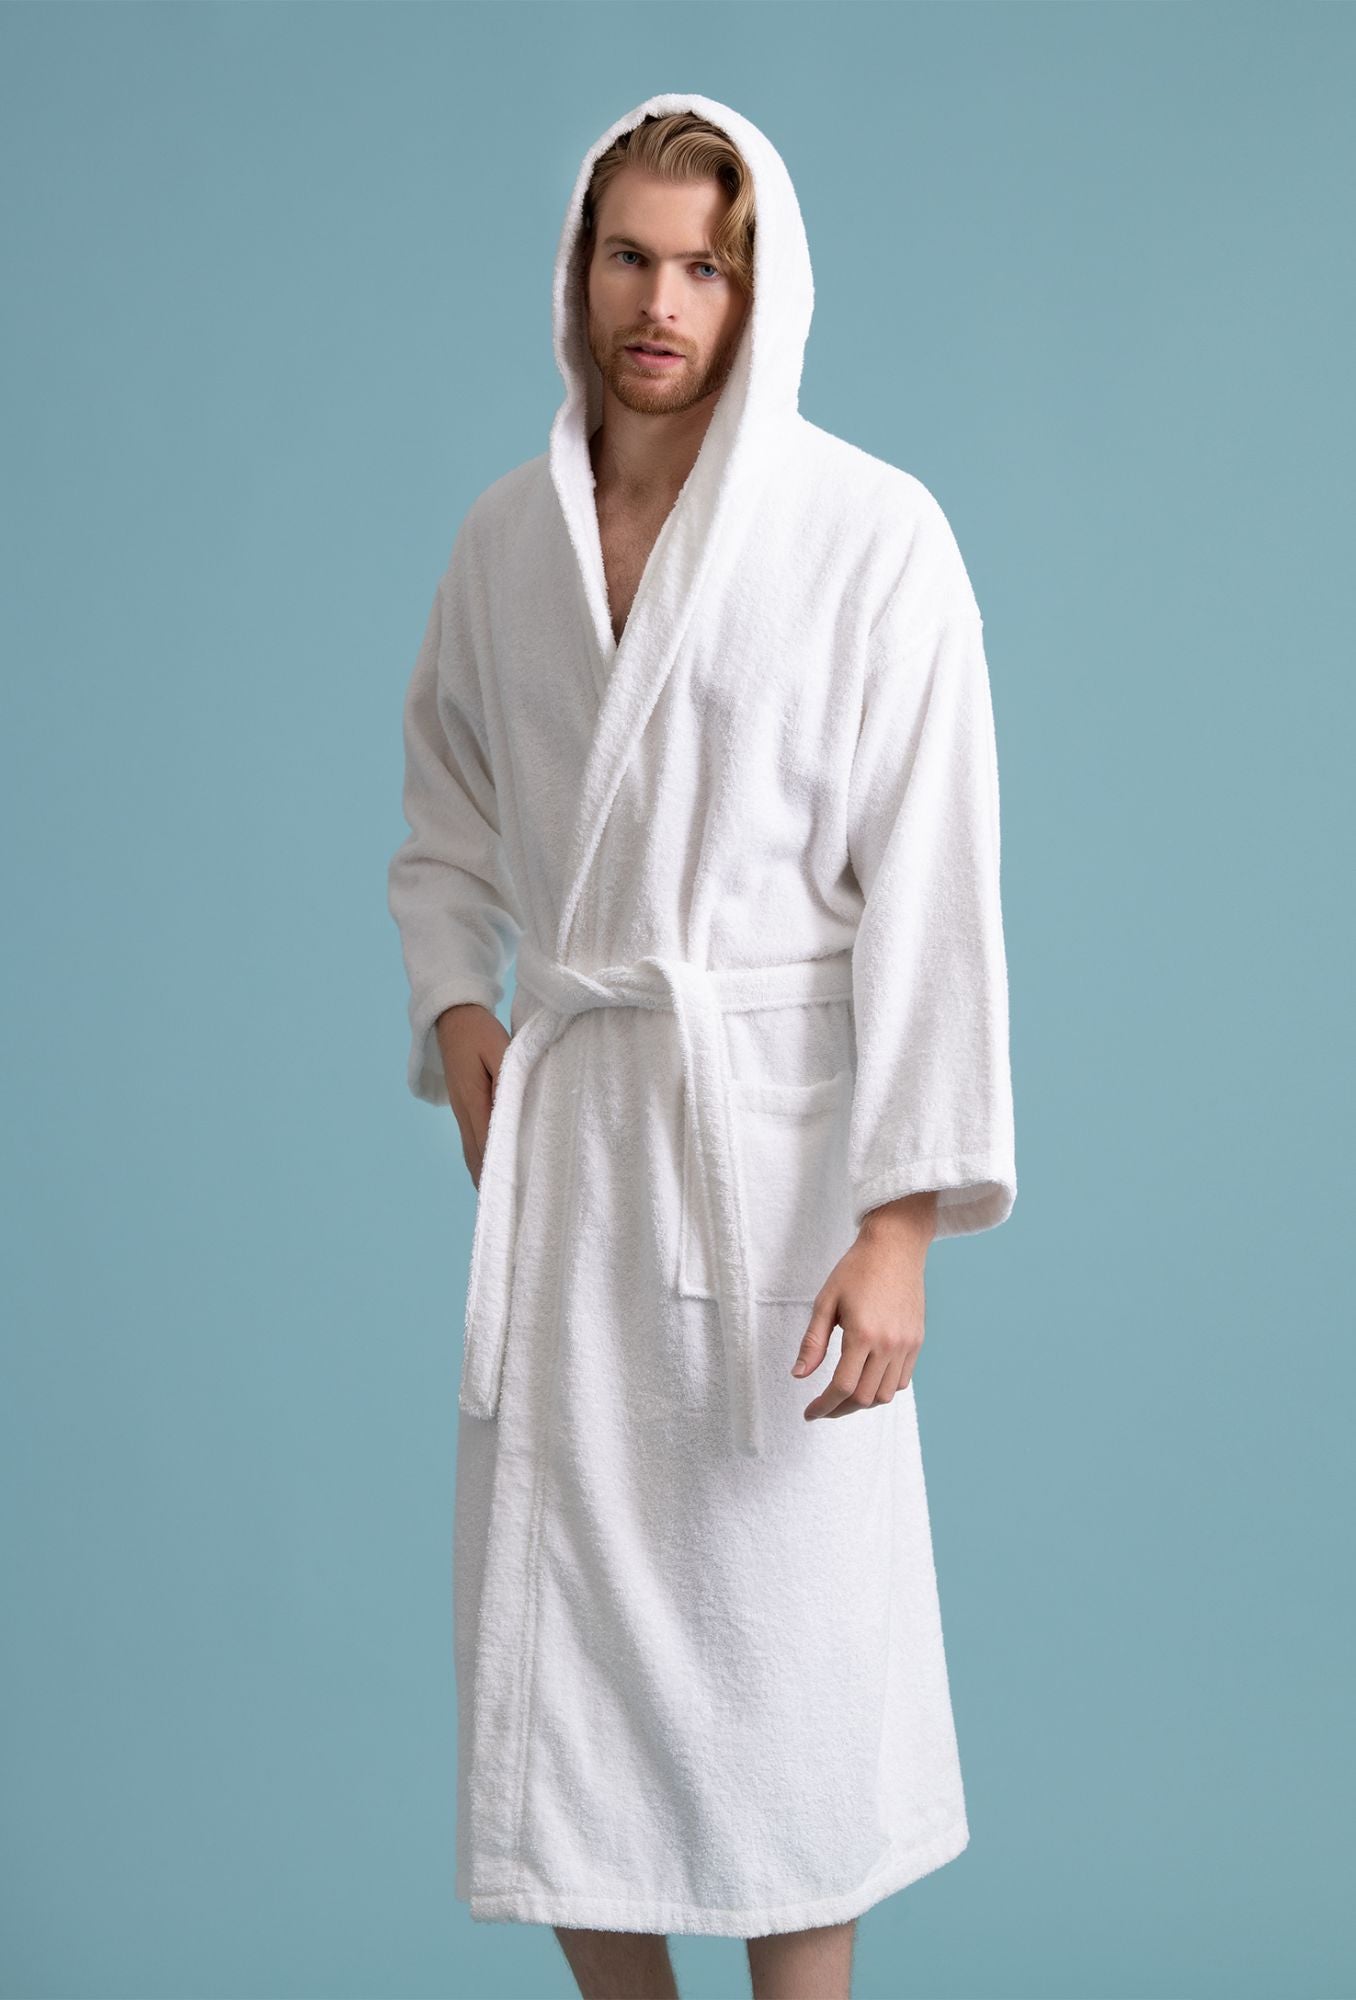 ENYOFE Mens Bathrobe Long Terry Cloth Robes Hooded Cotton Towel Bathrobe  for Spa Bath Loungewear at  Men's Clothing store